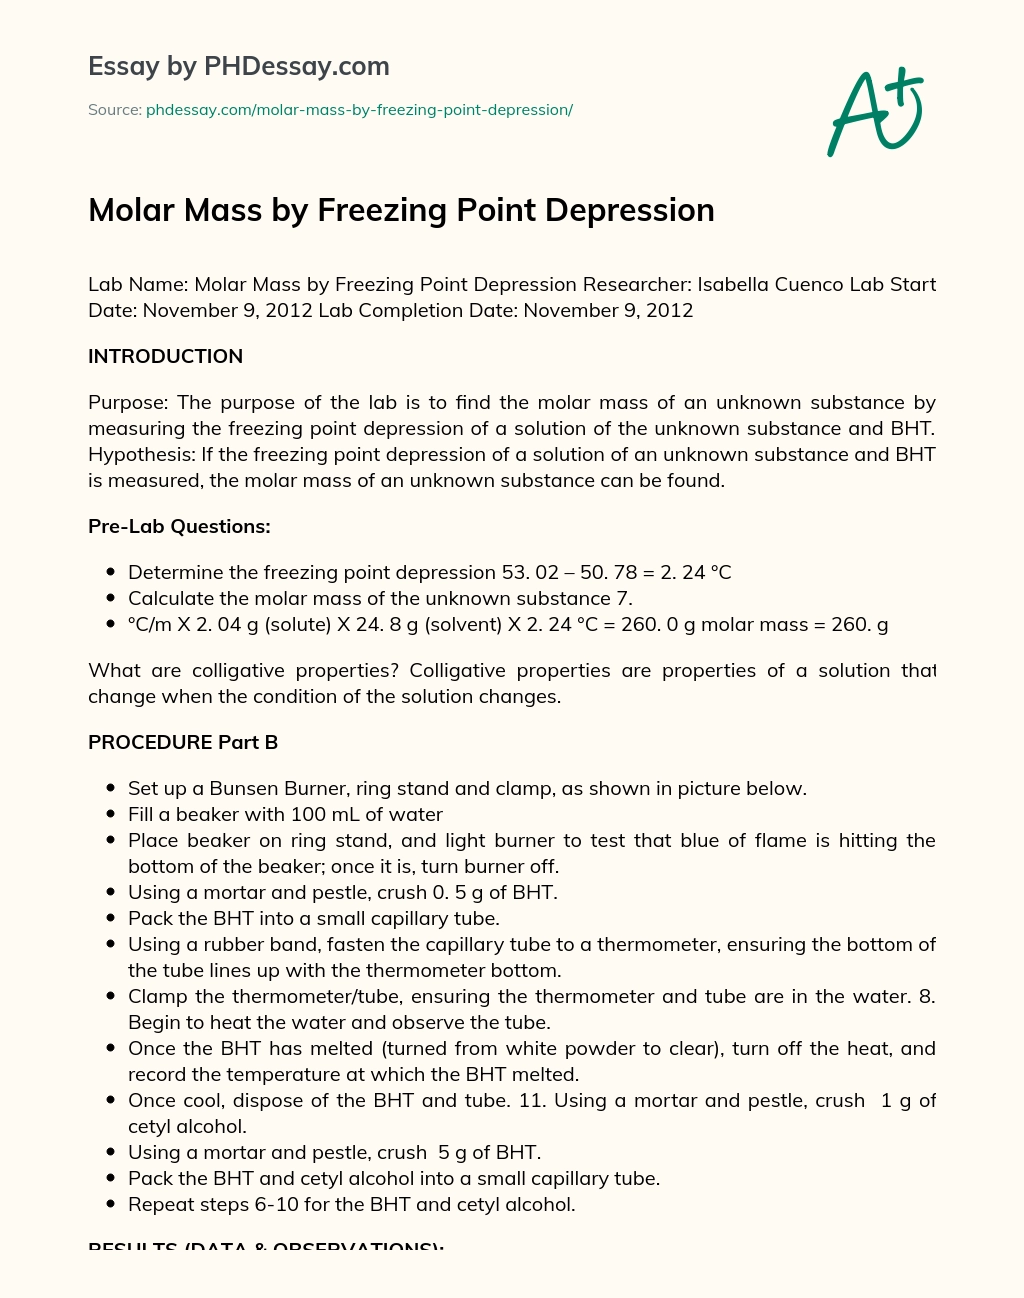 Molar Mass by Freezing Point Depression essay